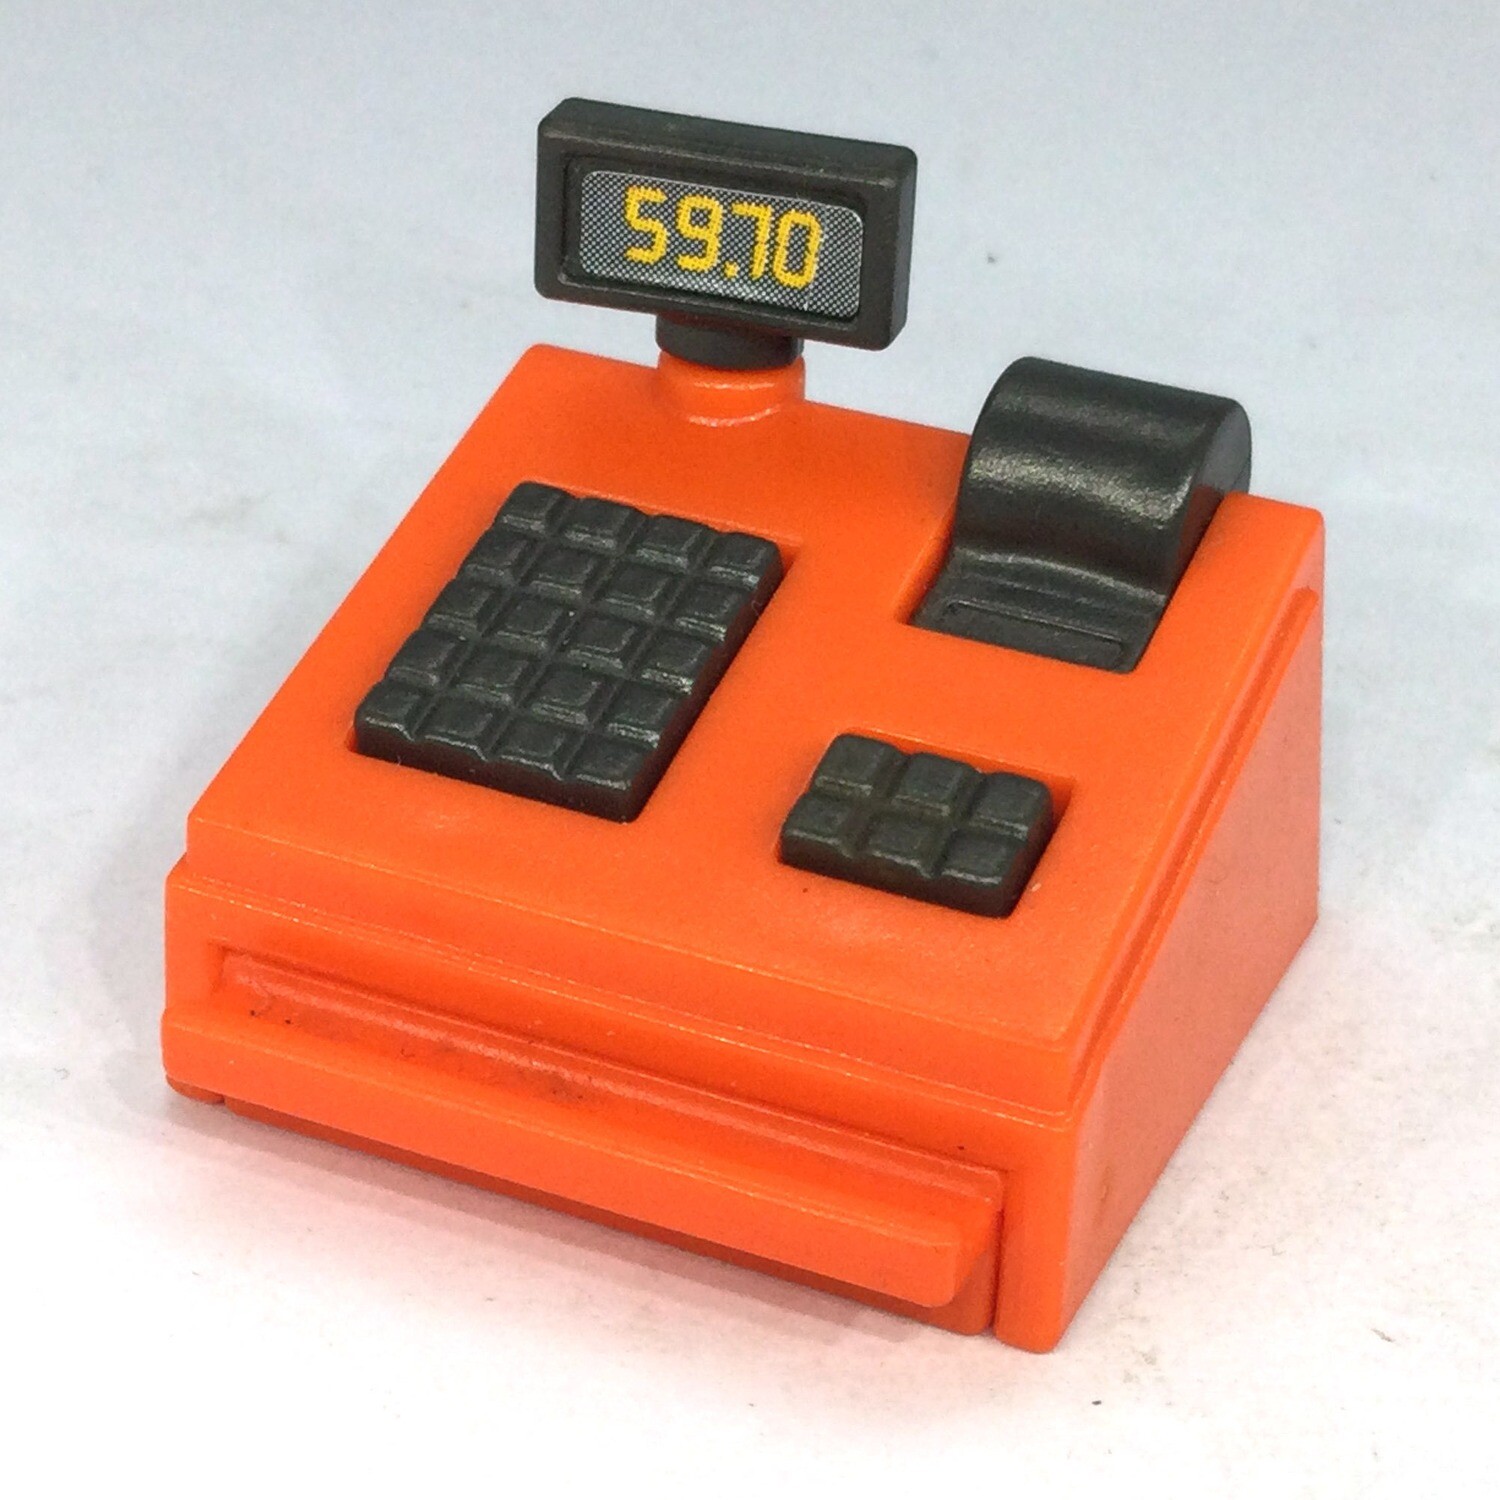 Playmobil caisse enregistreuse orange 2